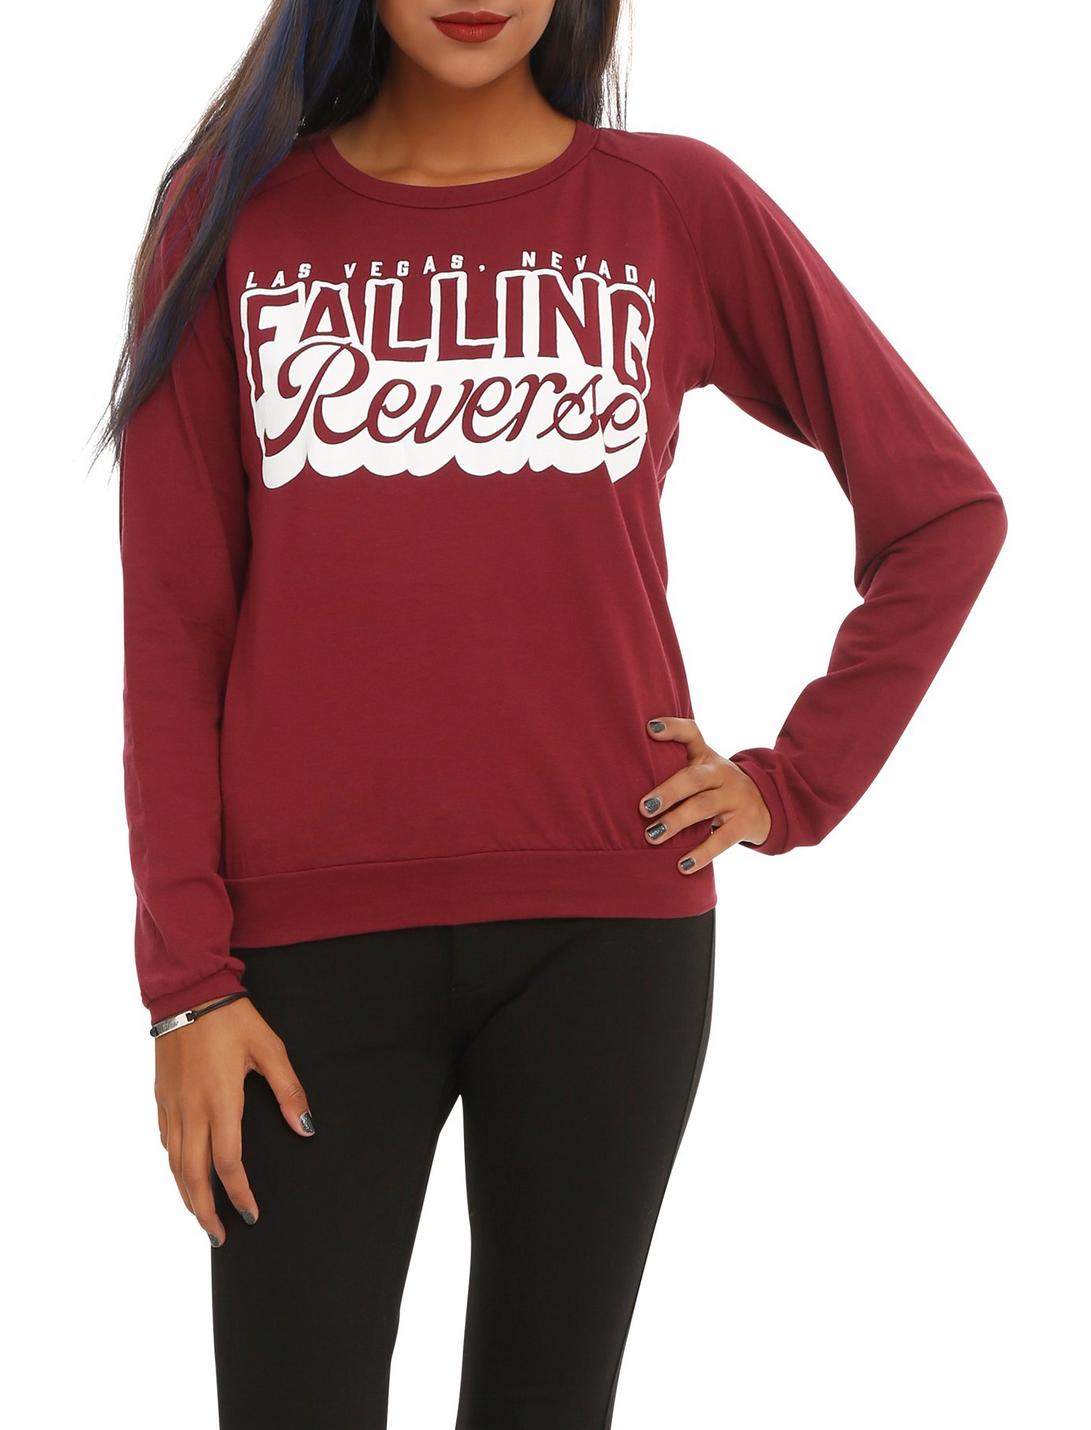 Falling In Reverse Athletic Logo Girls Pullover Top, BLACK, hi-res